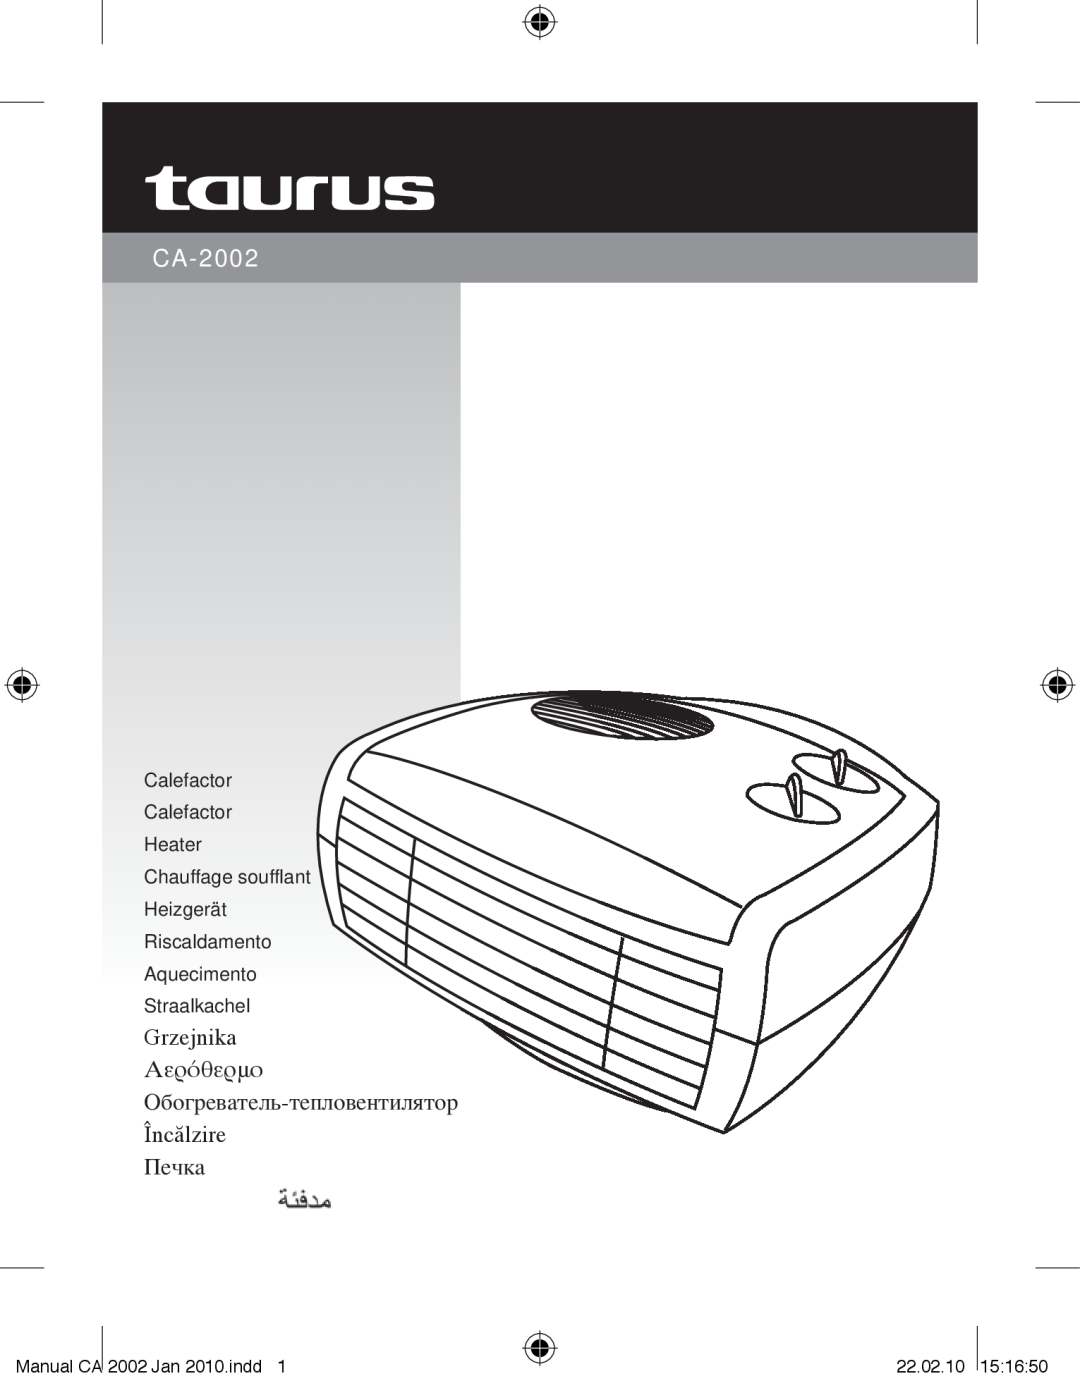 Taurus Group CA-2002 manual Calefactor Calefactor Heater Chauffage soufflant, Manual CA 2002 Jan 2010.indd, 22.02.10 